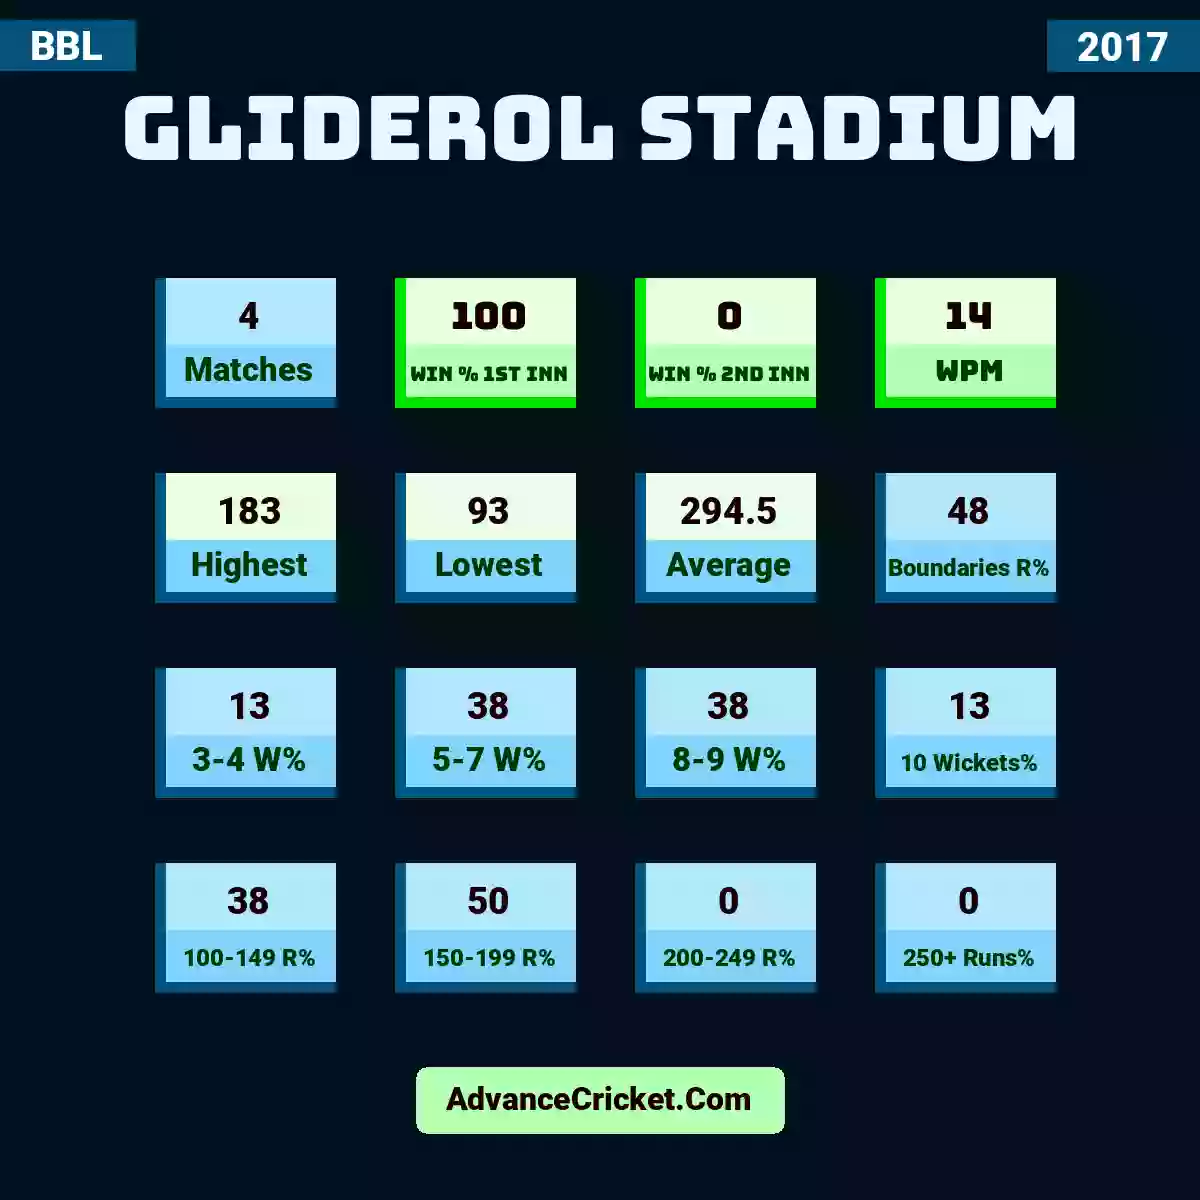 Image showing Gliderol Stadium with Matches: 4, Win % 1st Inn: 100, Win % 2nd Inn: 0, WPM: 14, Highest: 183, Lowest: 93, Average: 294.5, Boundaries R%: 48, 3-4 W%: 13, 5-7 W%: 38, 8-9 W%: 38, 10 Wickets%: 13, 100-149 R%: 38, 150-199 R%: 50, 200-249 R%: 0, 250+ Runs%: 0.